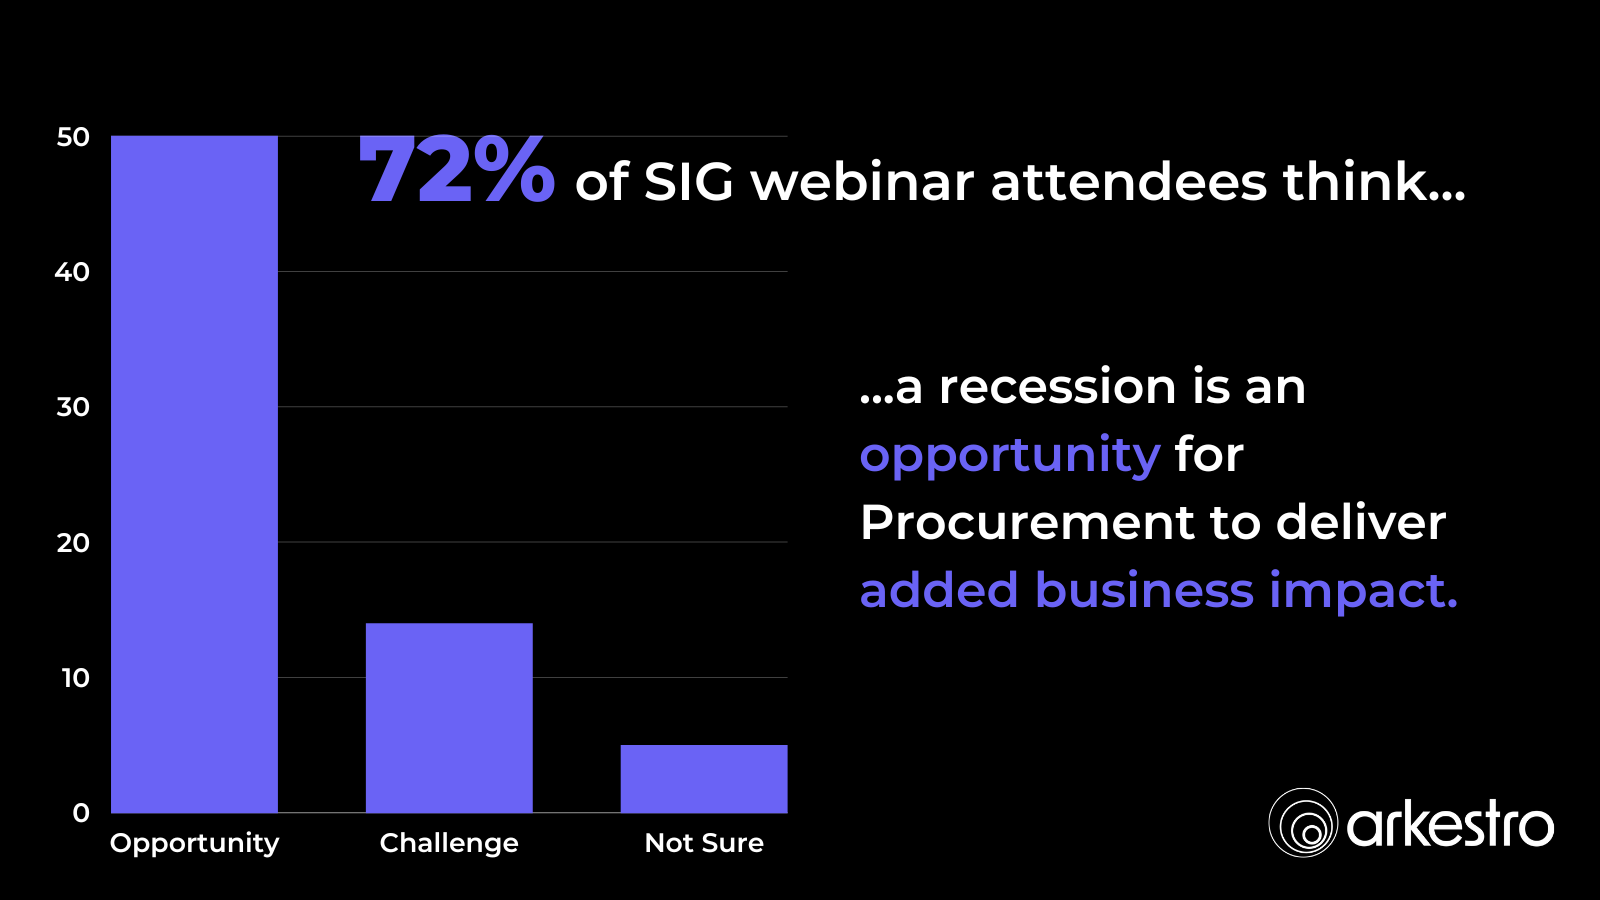 72% of SIG webinar attendees think...